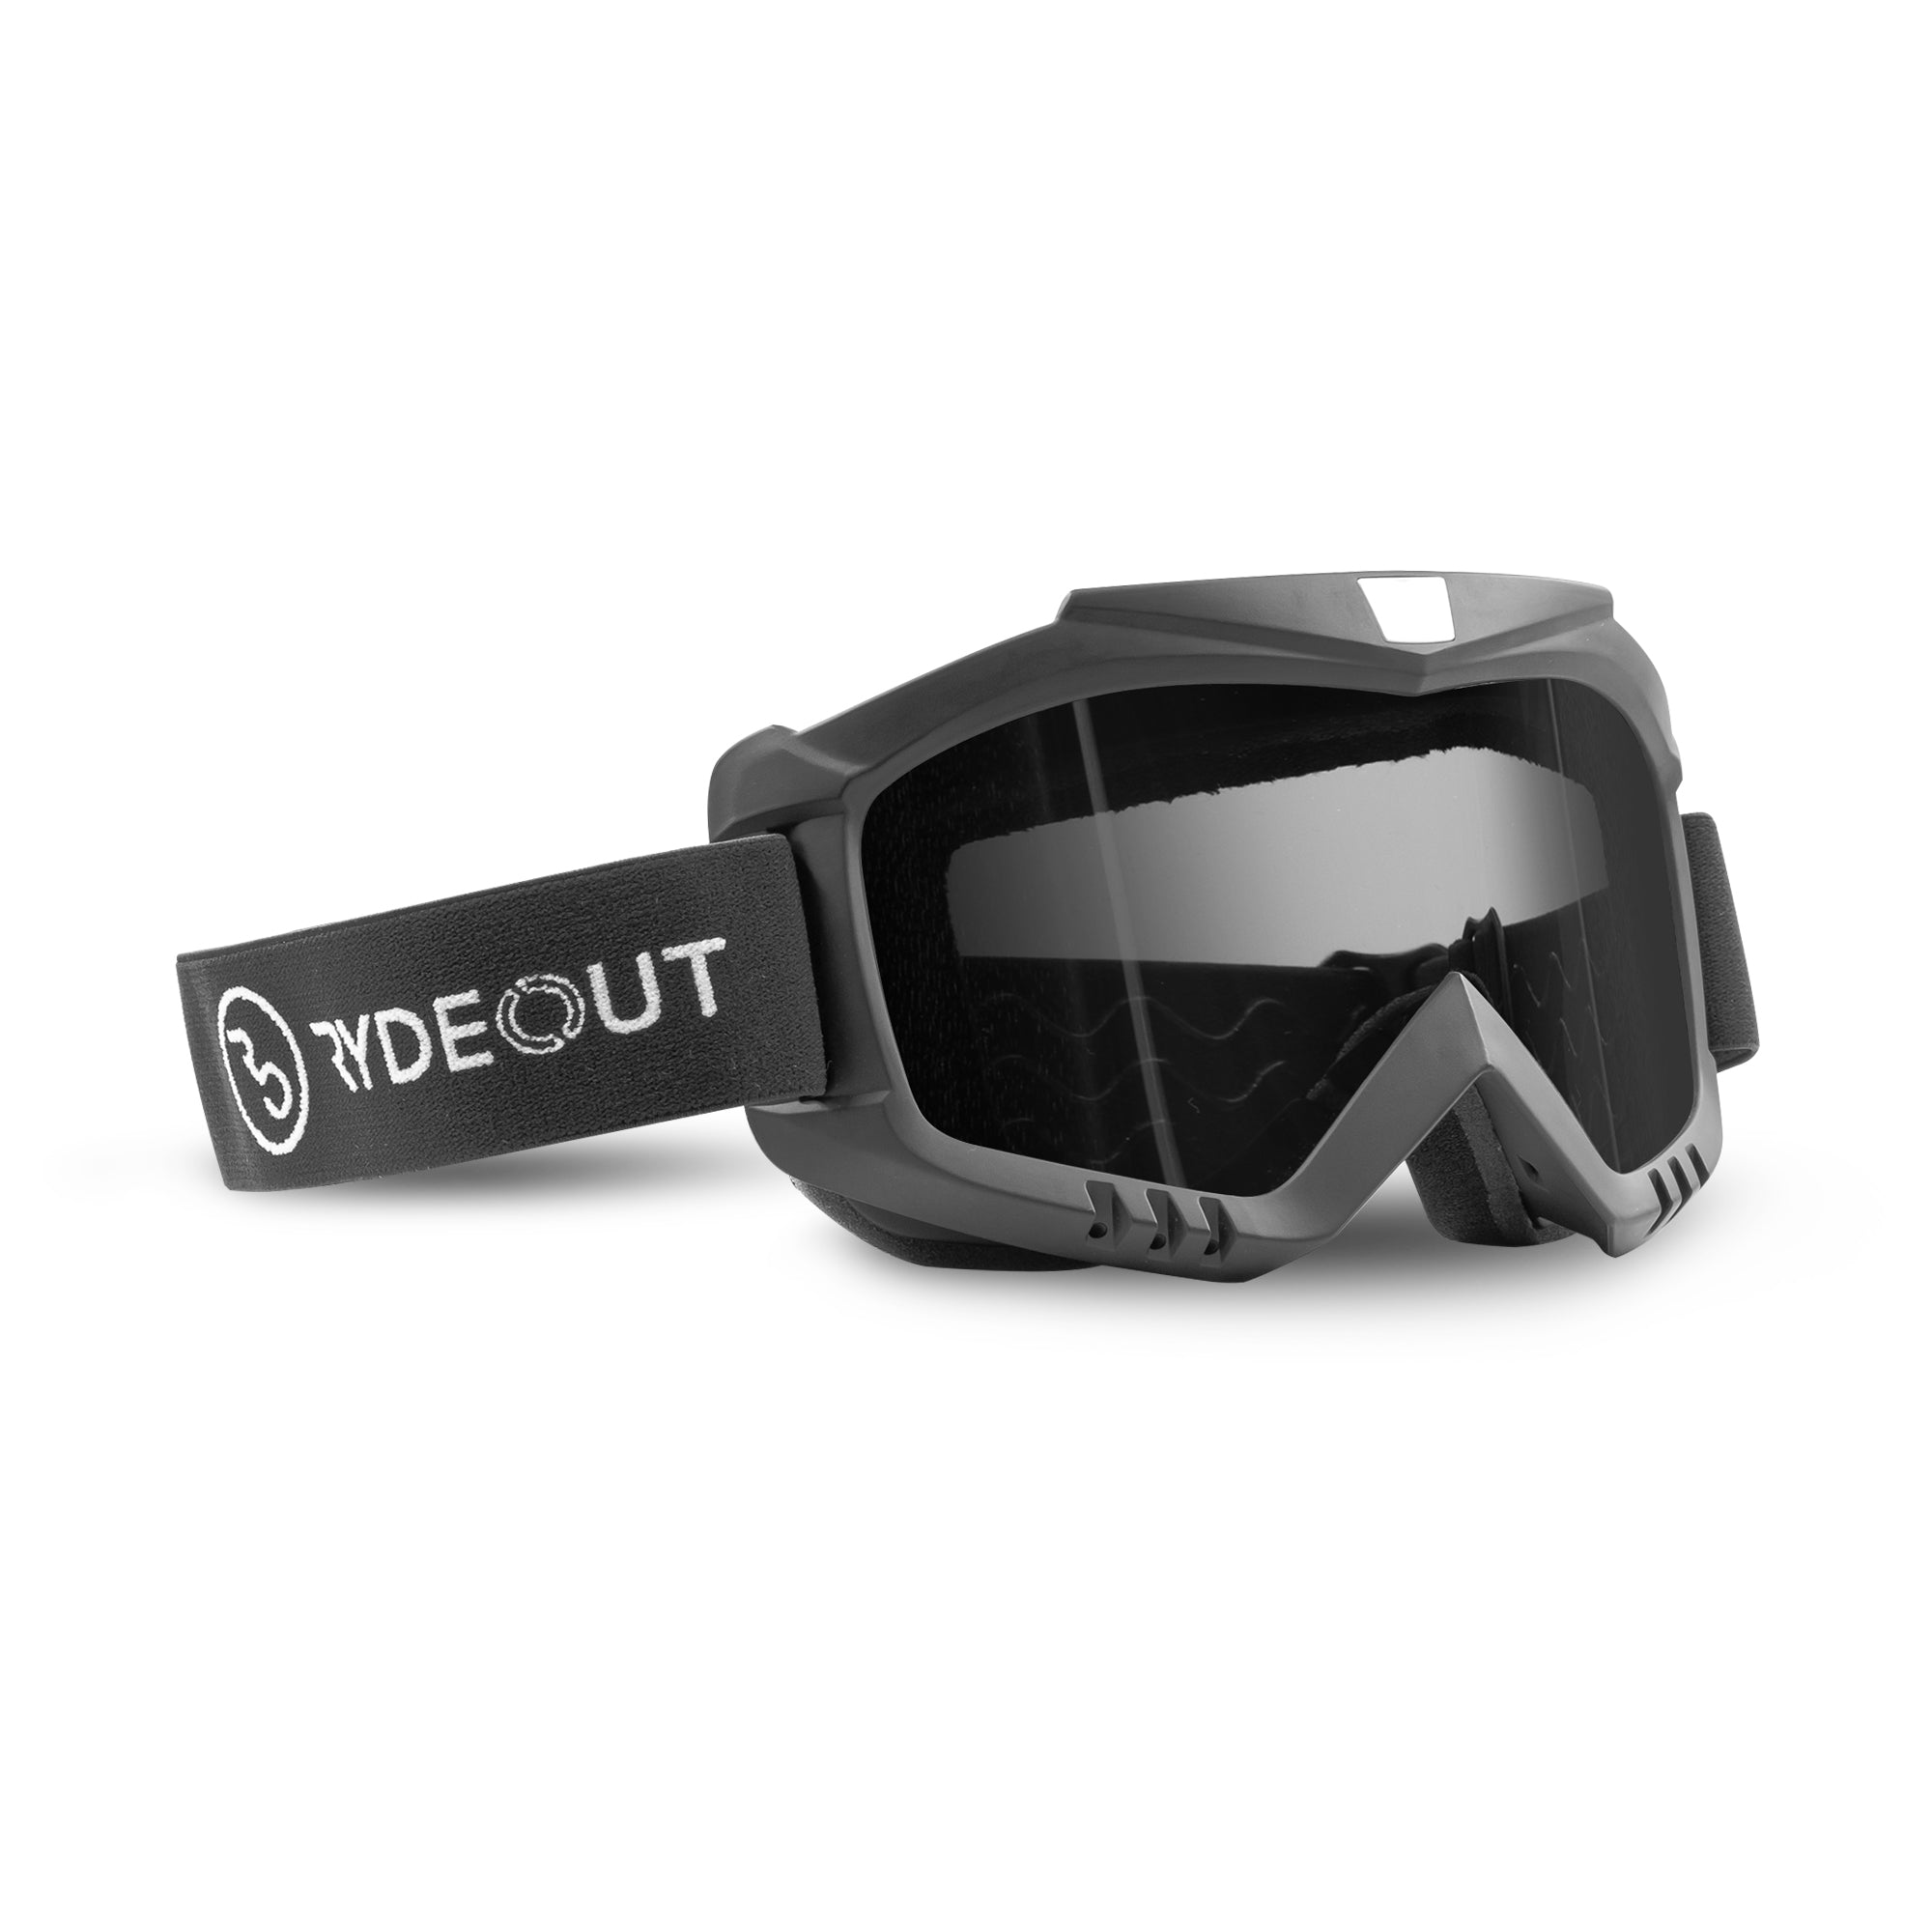 Rydeout MX Goggles – Smoke Lens